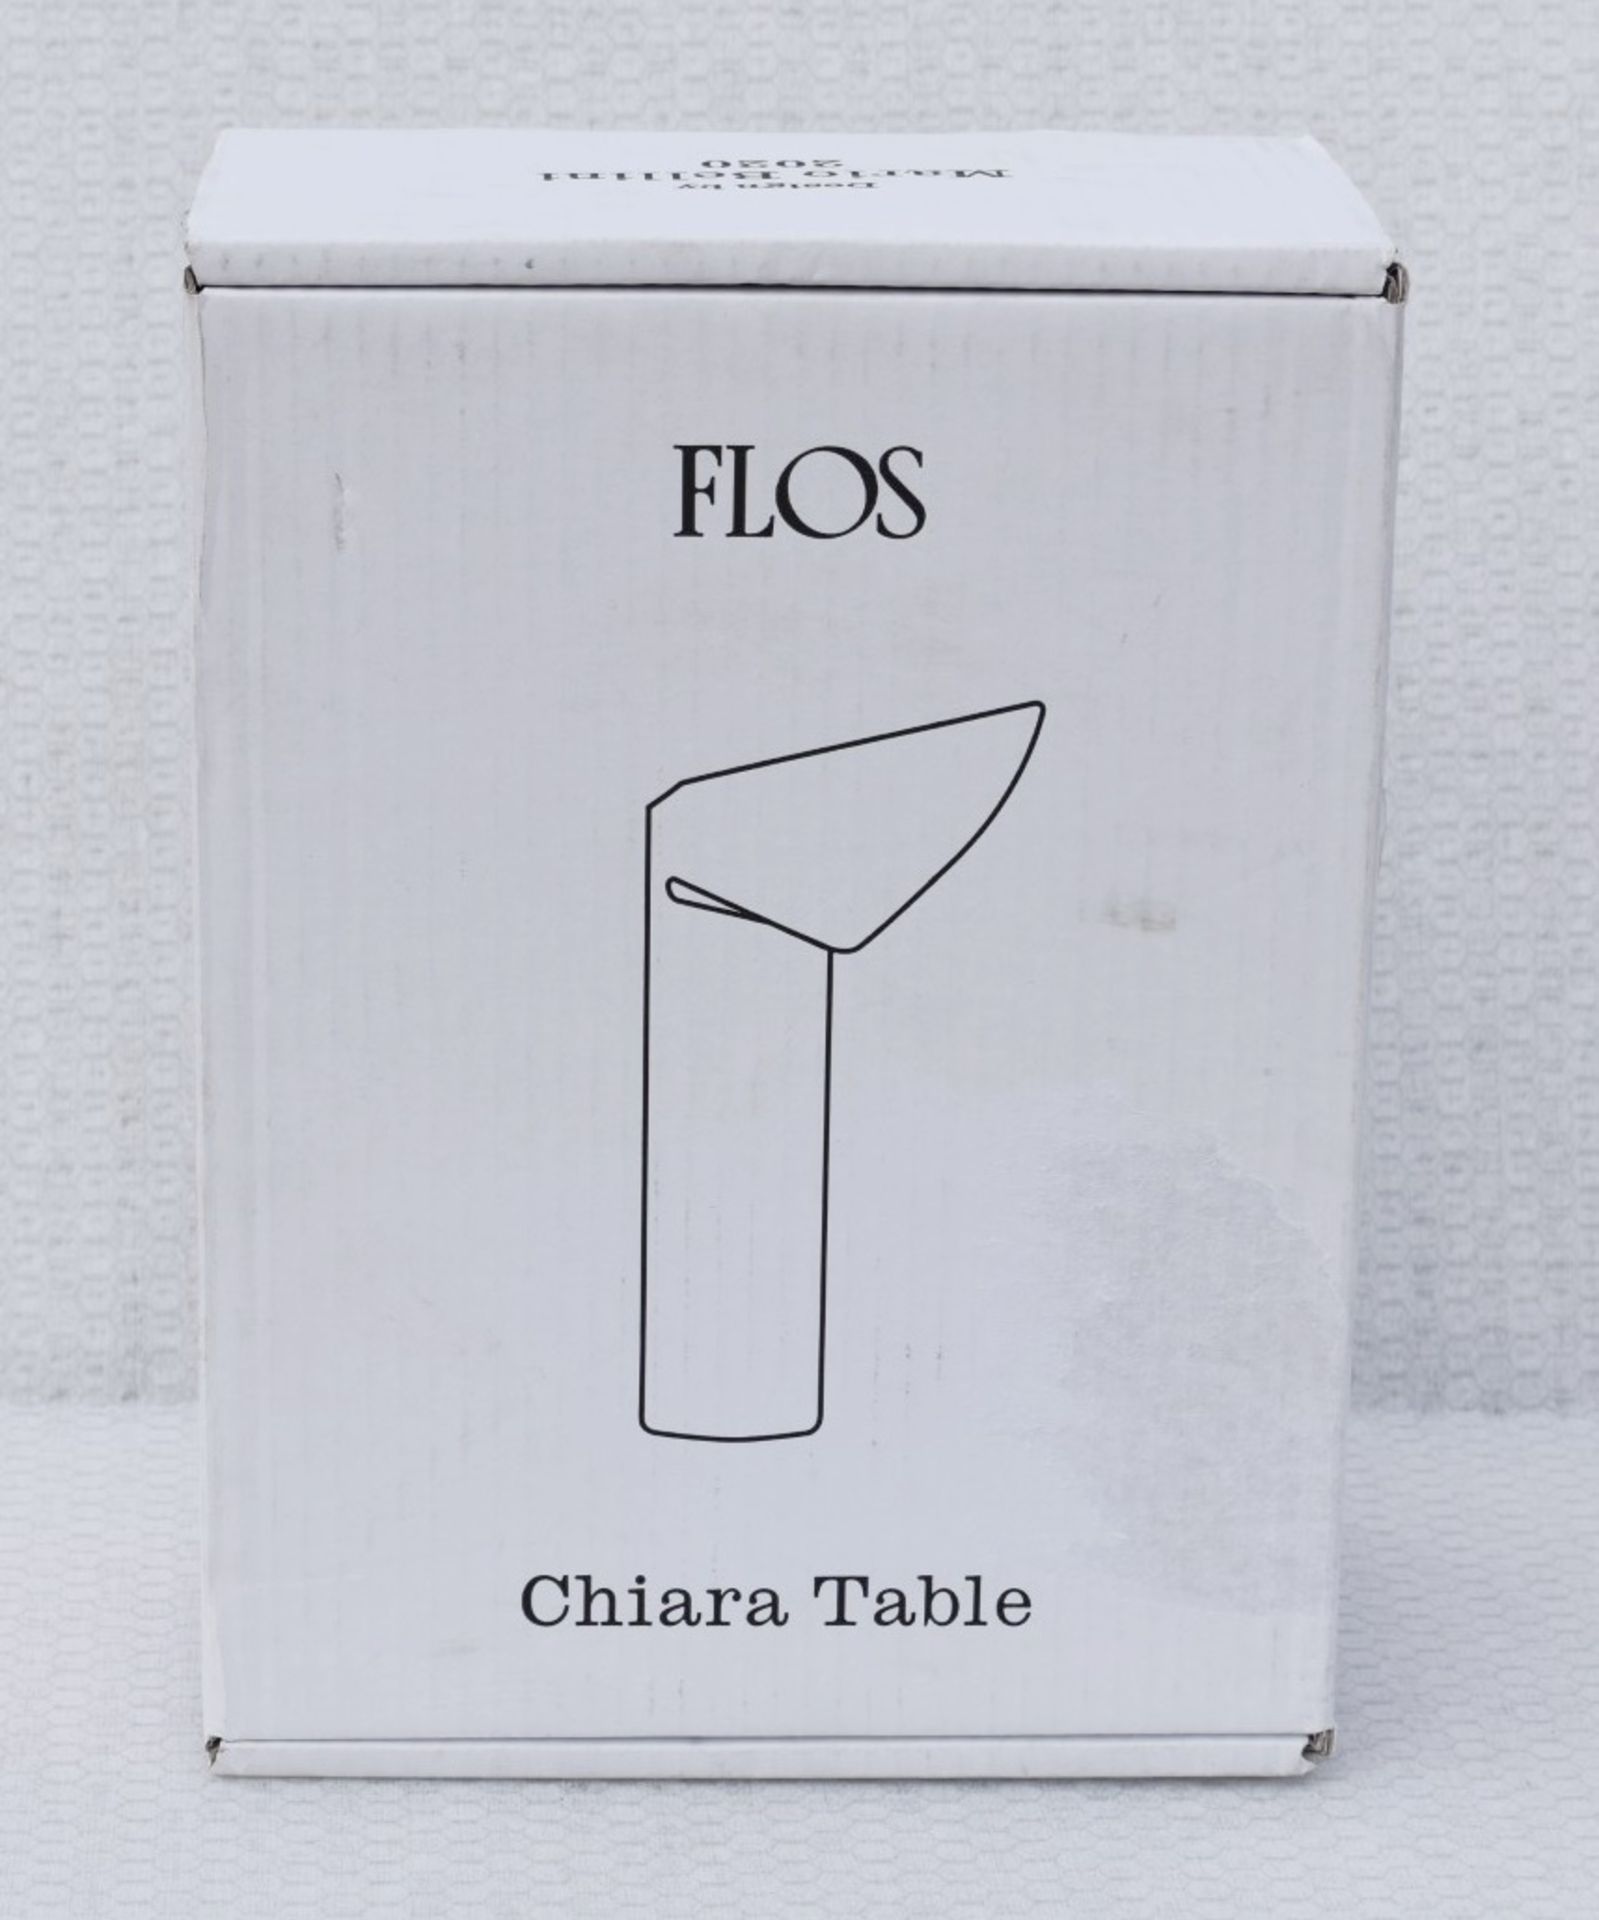 1 x FLOS Chiara Table Lamp (No Shade) - Original Price £460.00 - Unused Boxed Stock - Ref: